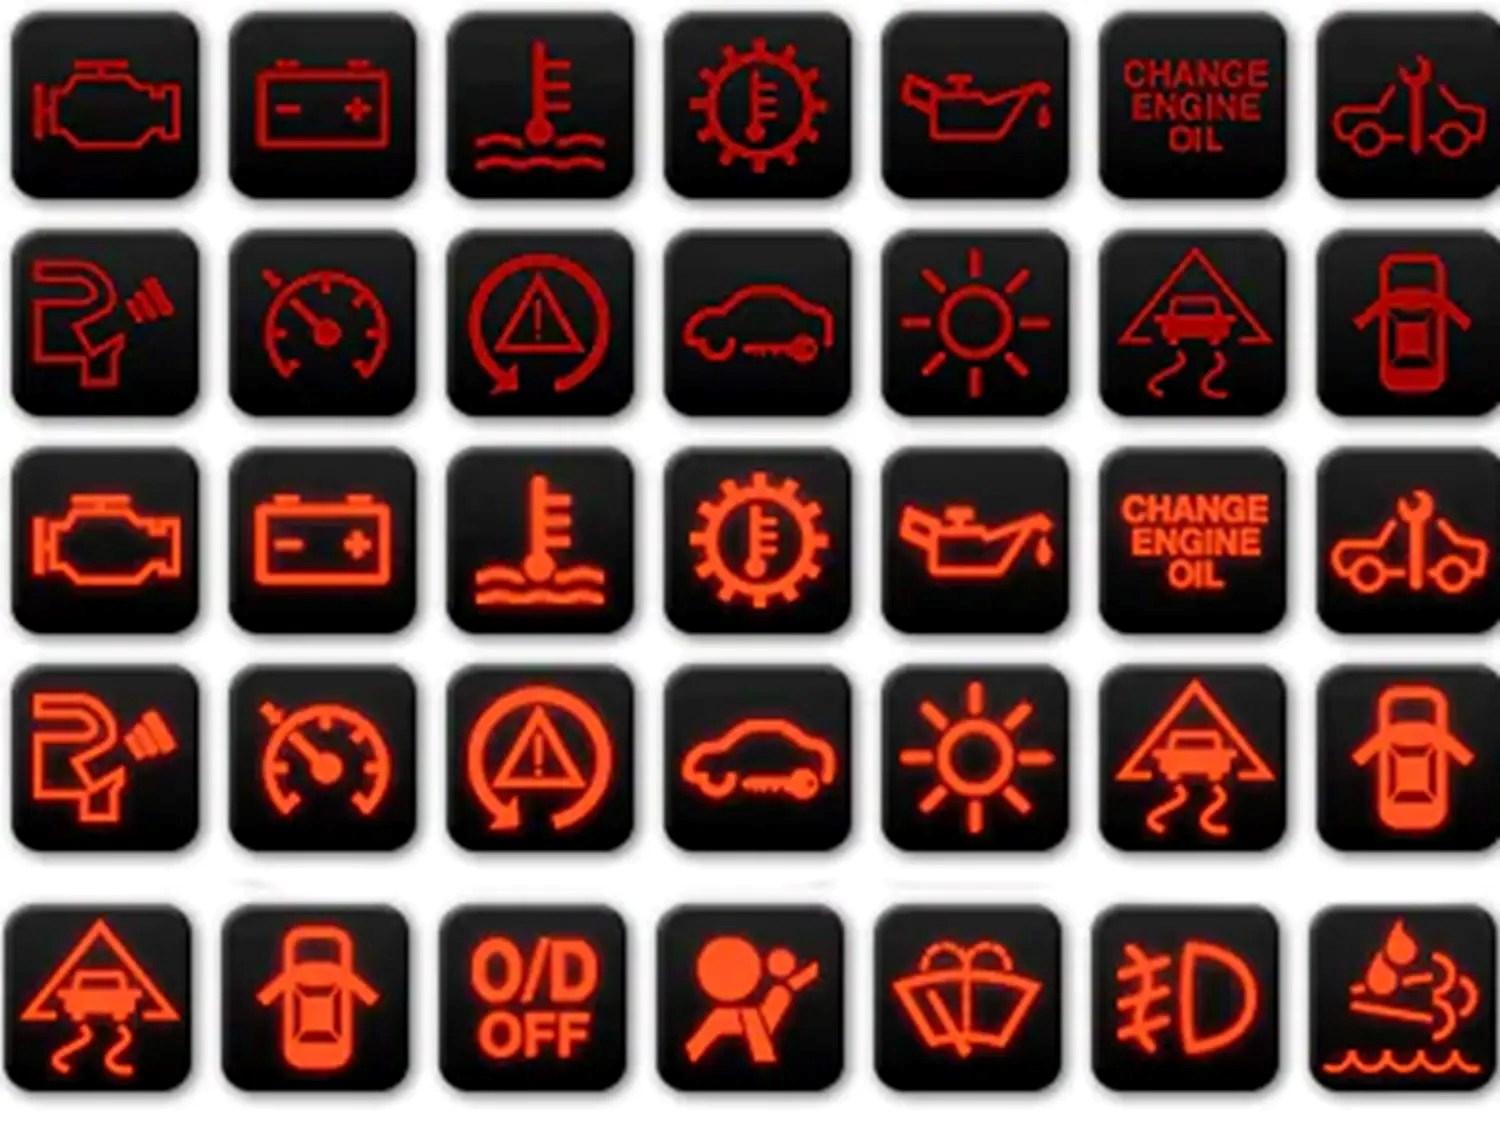 Warning and Indicator Light Symbols